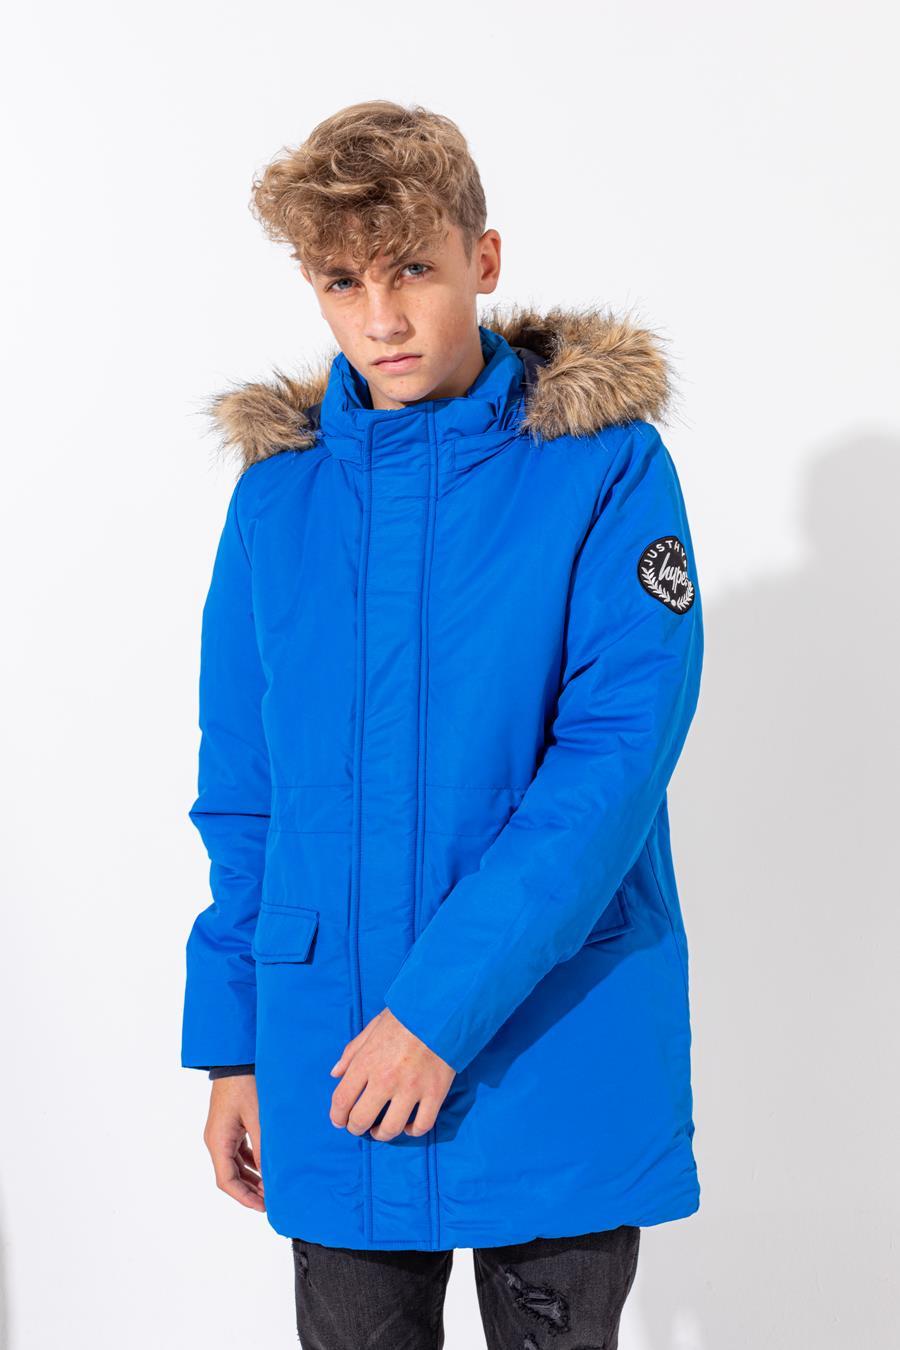 Hype Blue Crest Sleeve Kids Glacial Jacket | Size 13